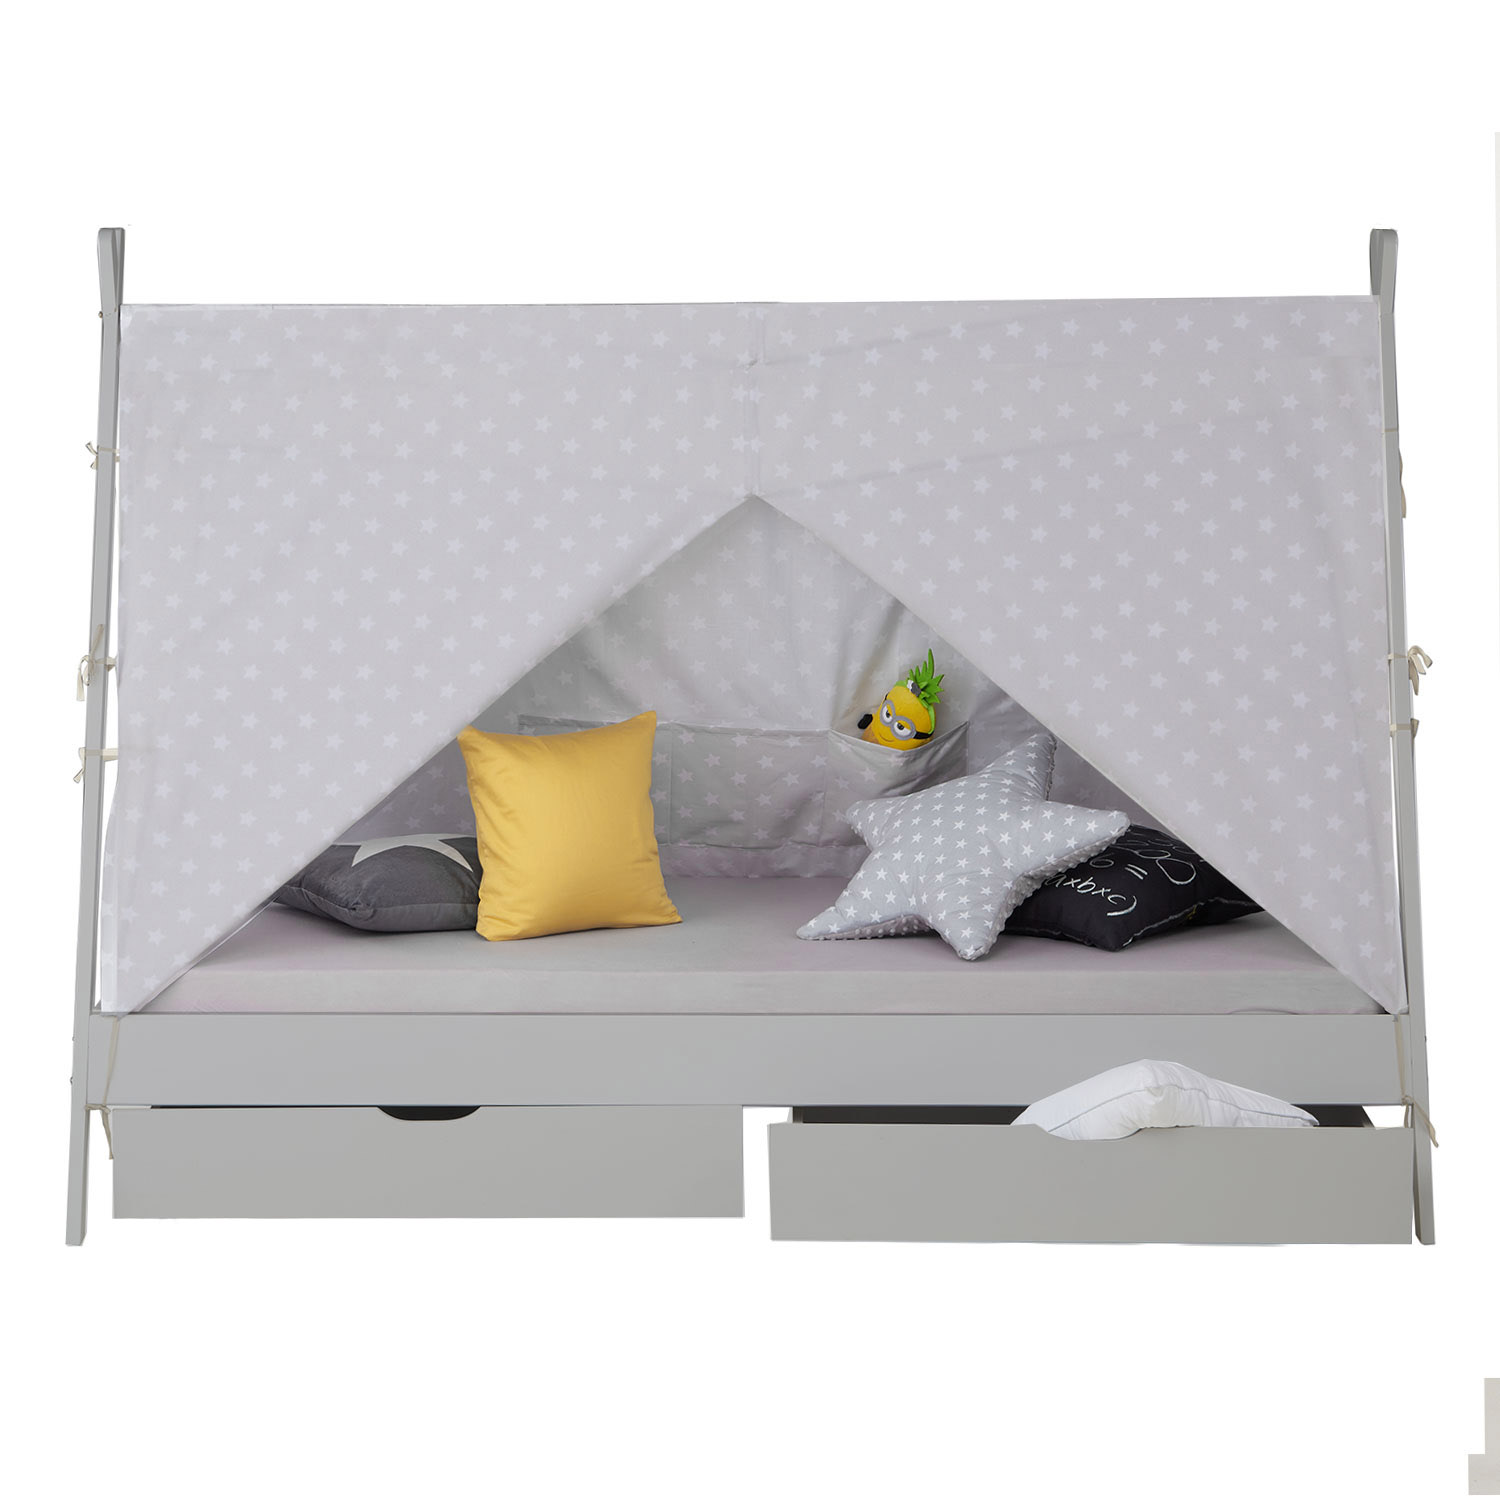 Kinderbett mit Matratze TIPI 90x200 Jugendbett weiß grau Holzbett Kinderzimmer Stoff Bettkasten